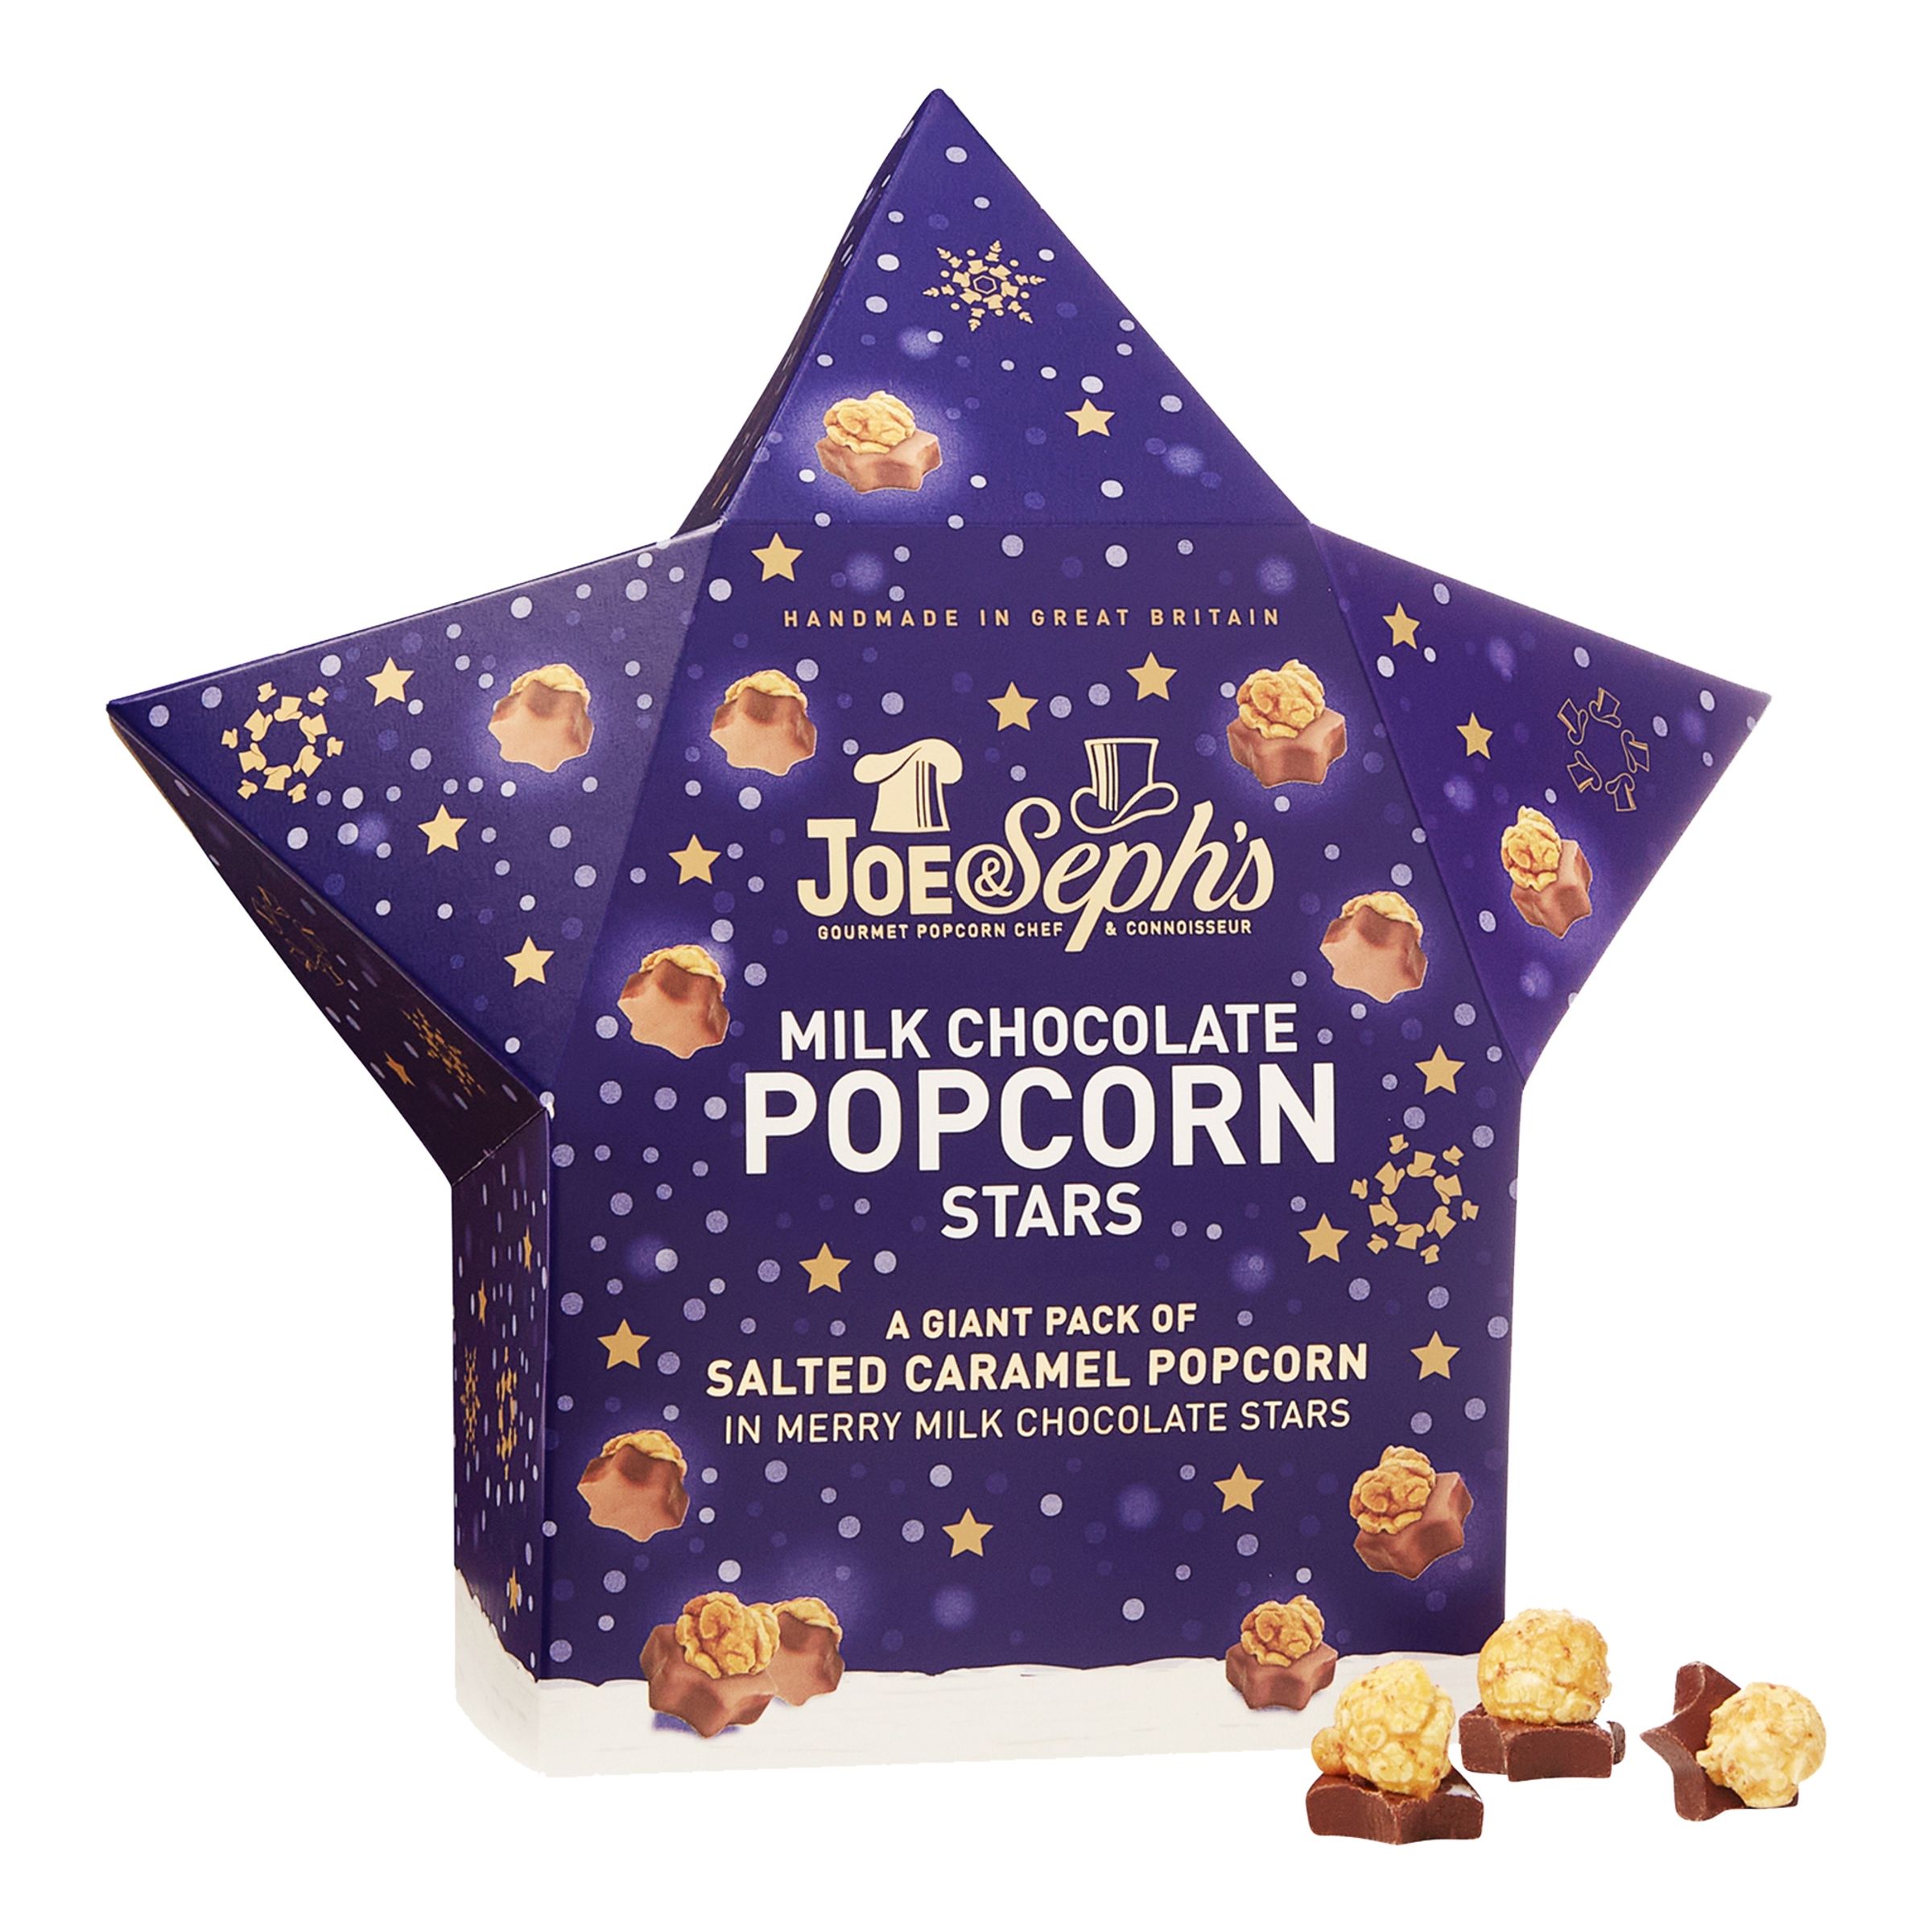 Milk Chocolate Popcorn Stars Festive Gift Box - 105 gram